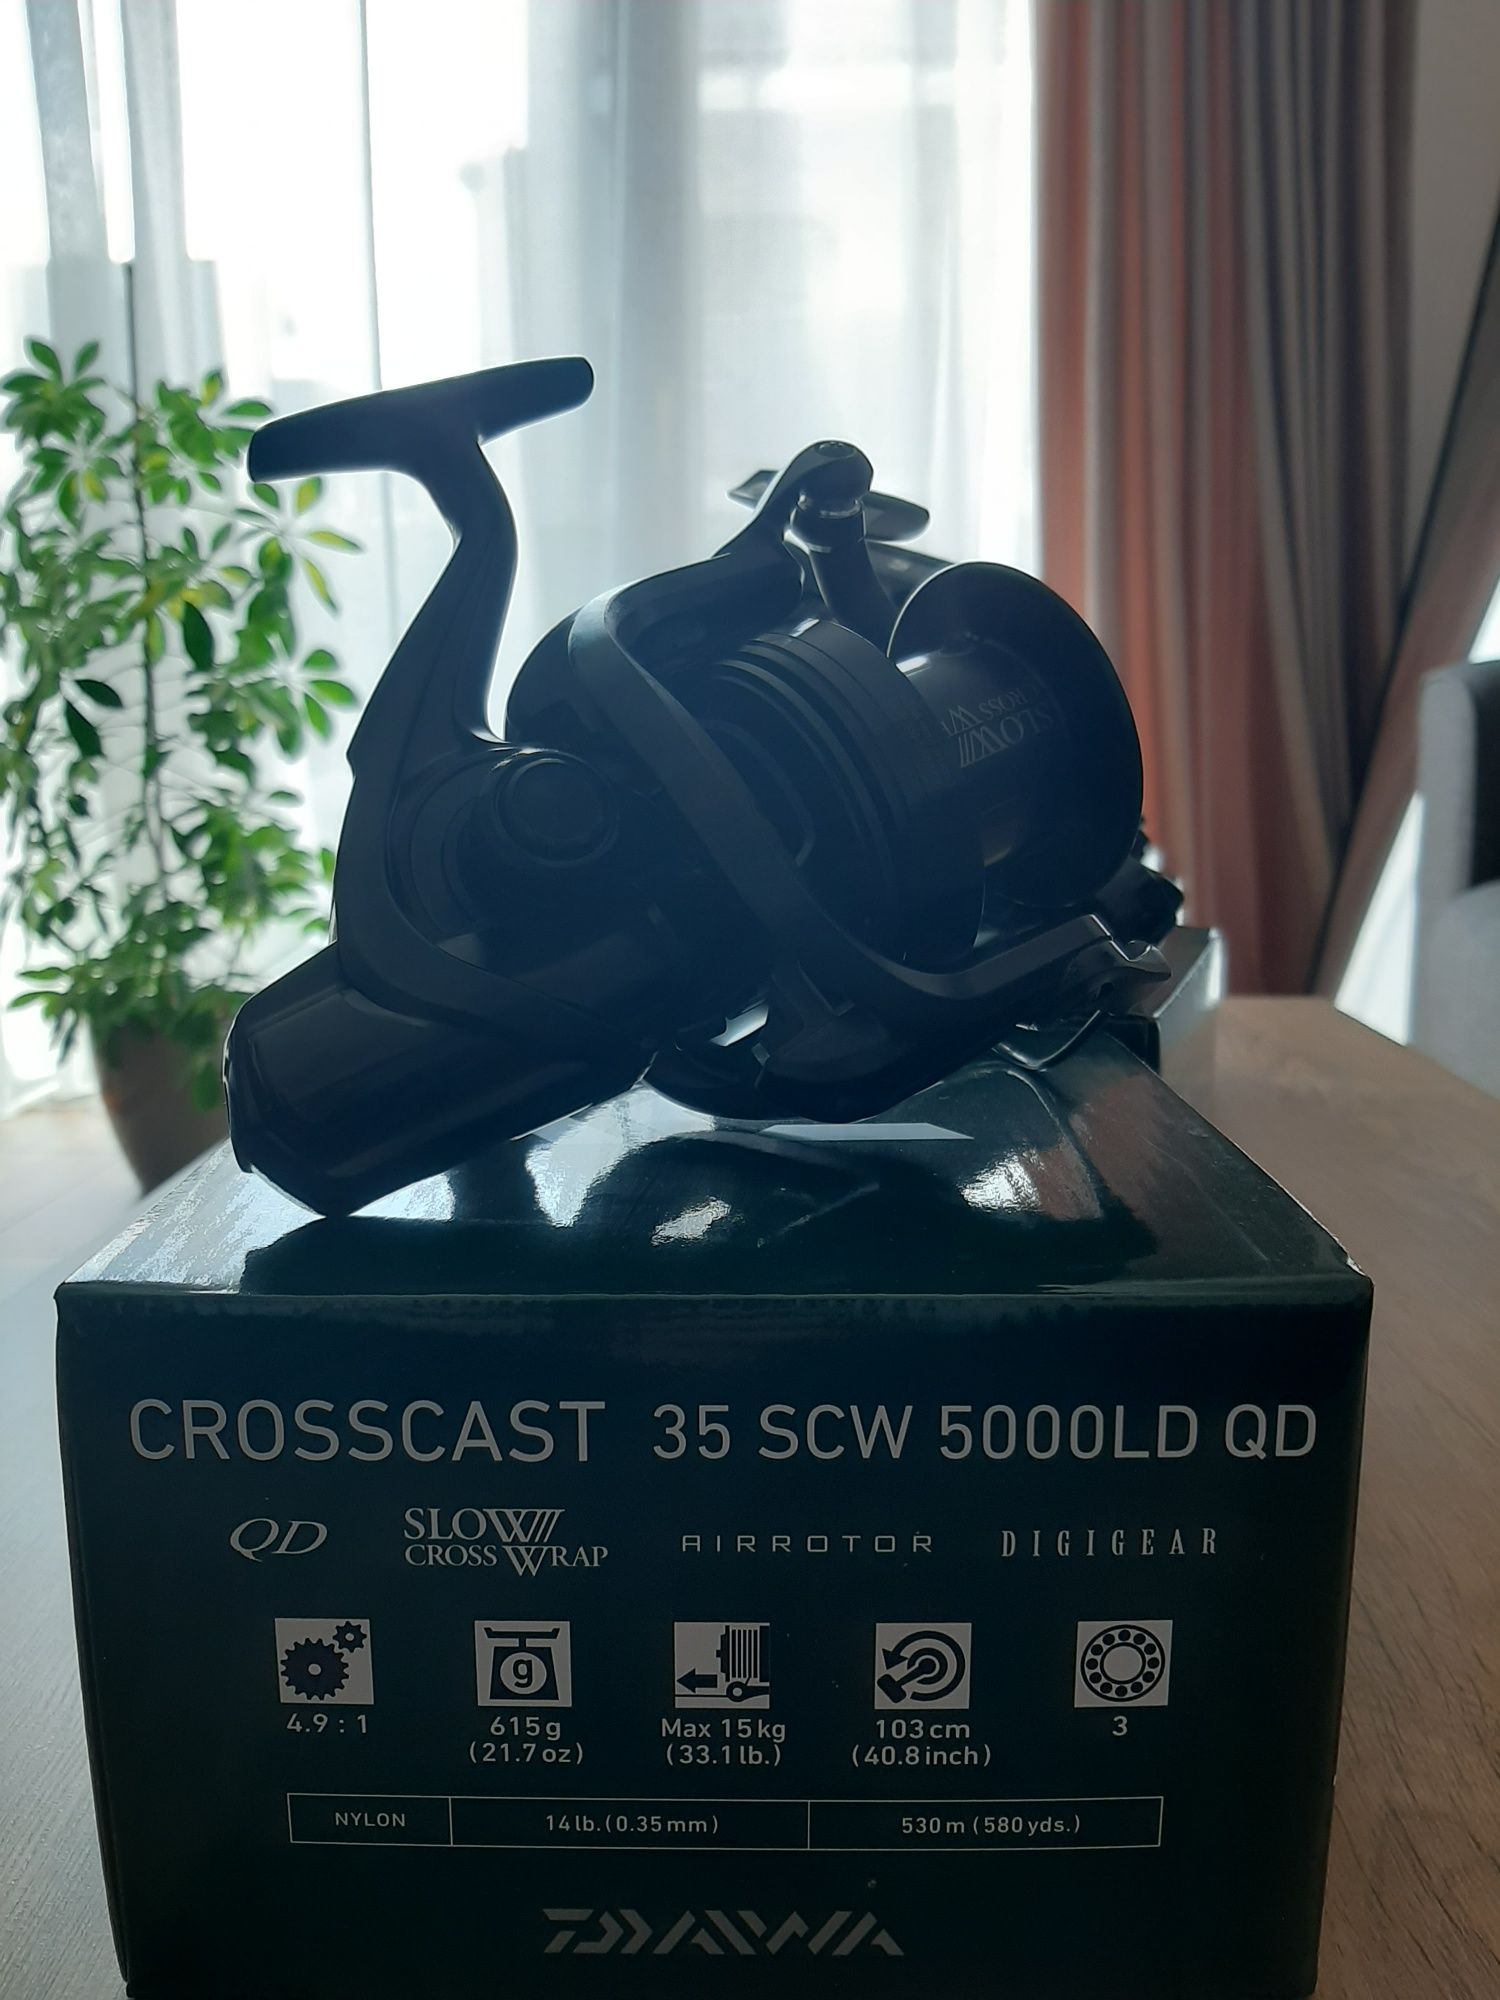 Mulinete crap Daiwa Crosscast 35 SCW 5000LD QD, 530m-0.35mm, NOI